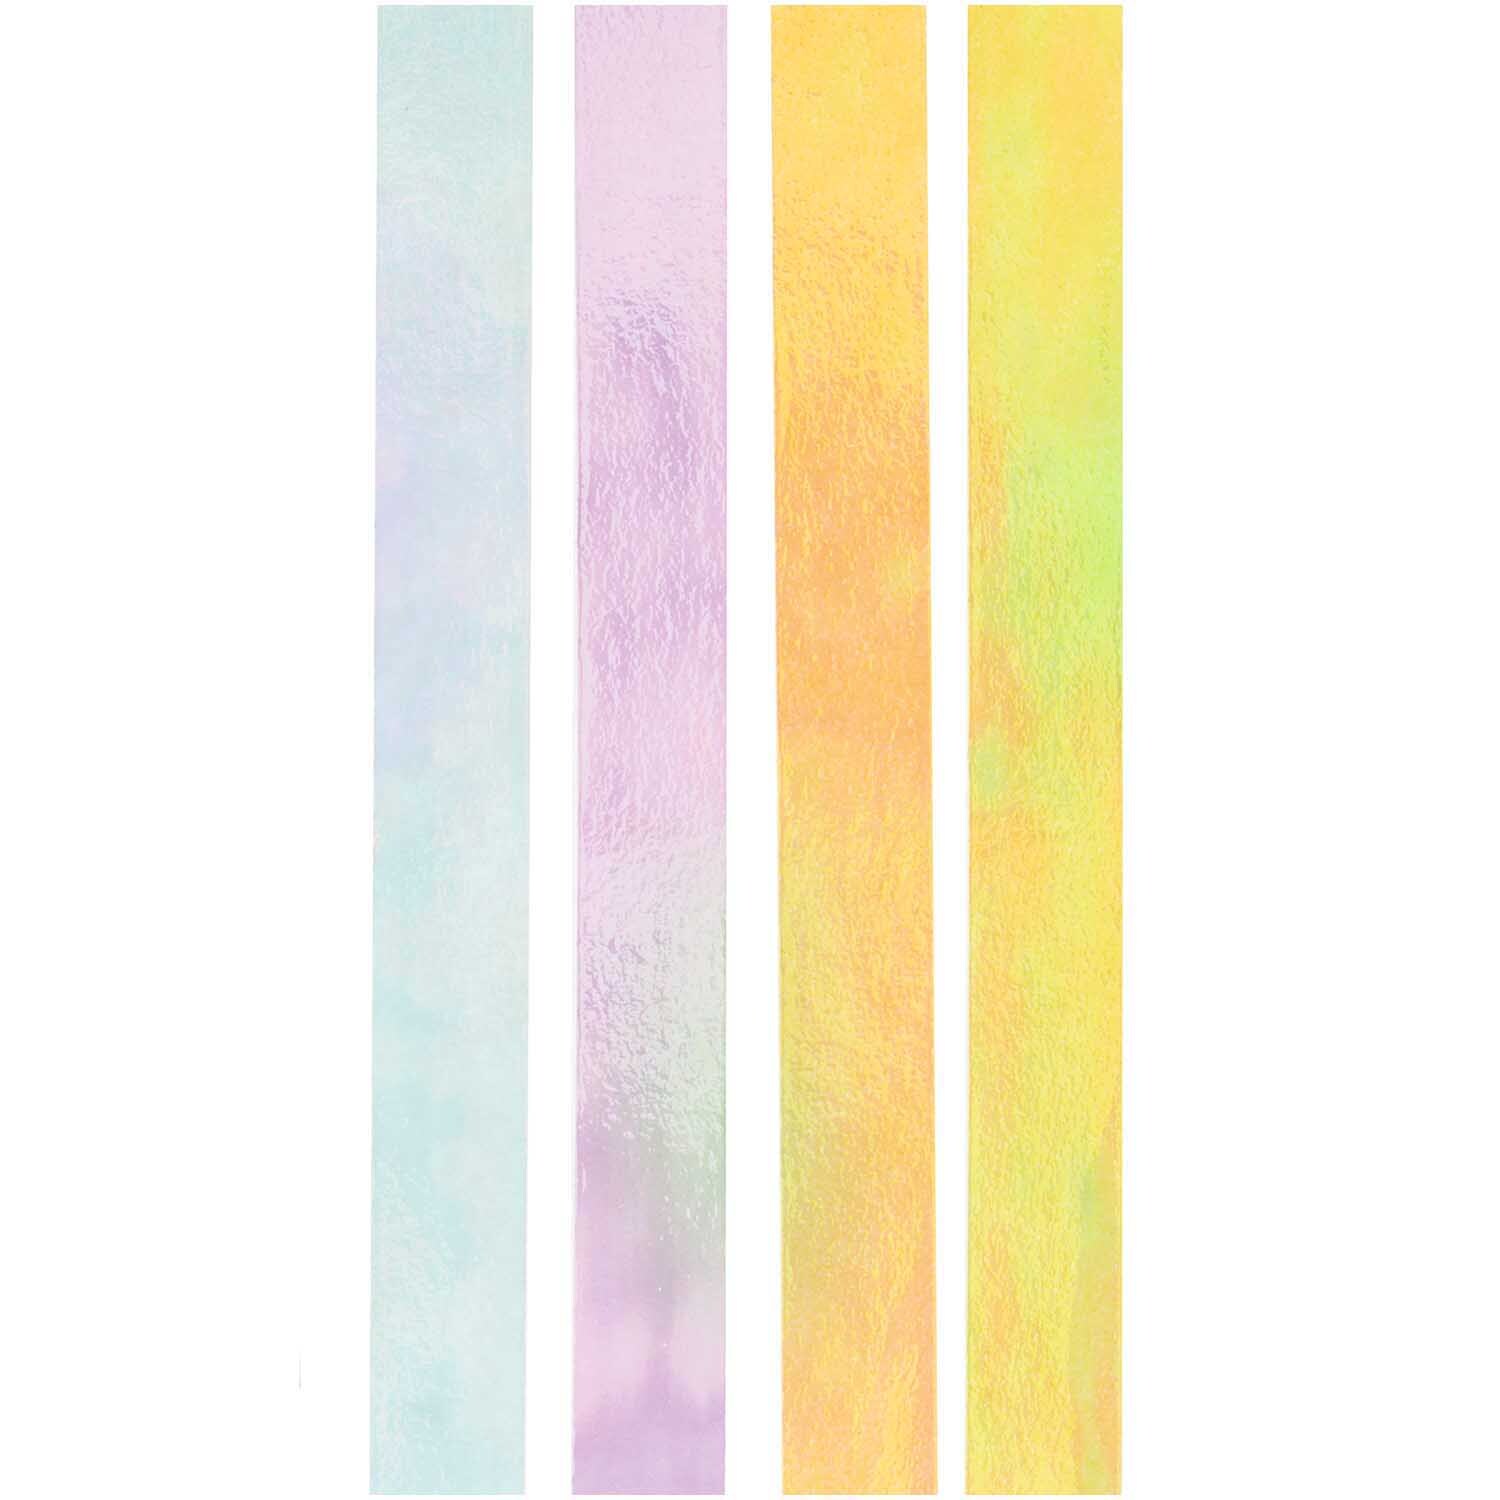 Paper Poetry Tape Set irisierend pastell 15mm 5m 4 Stück